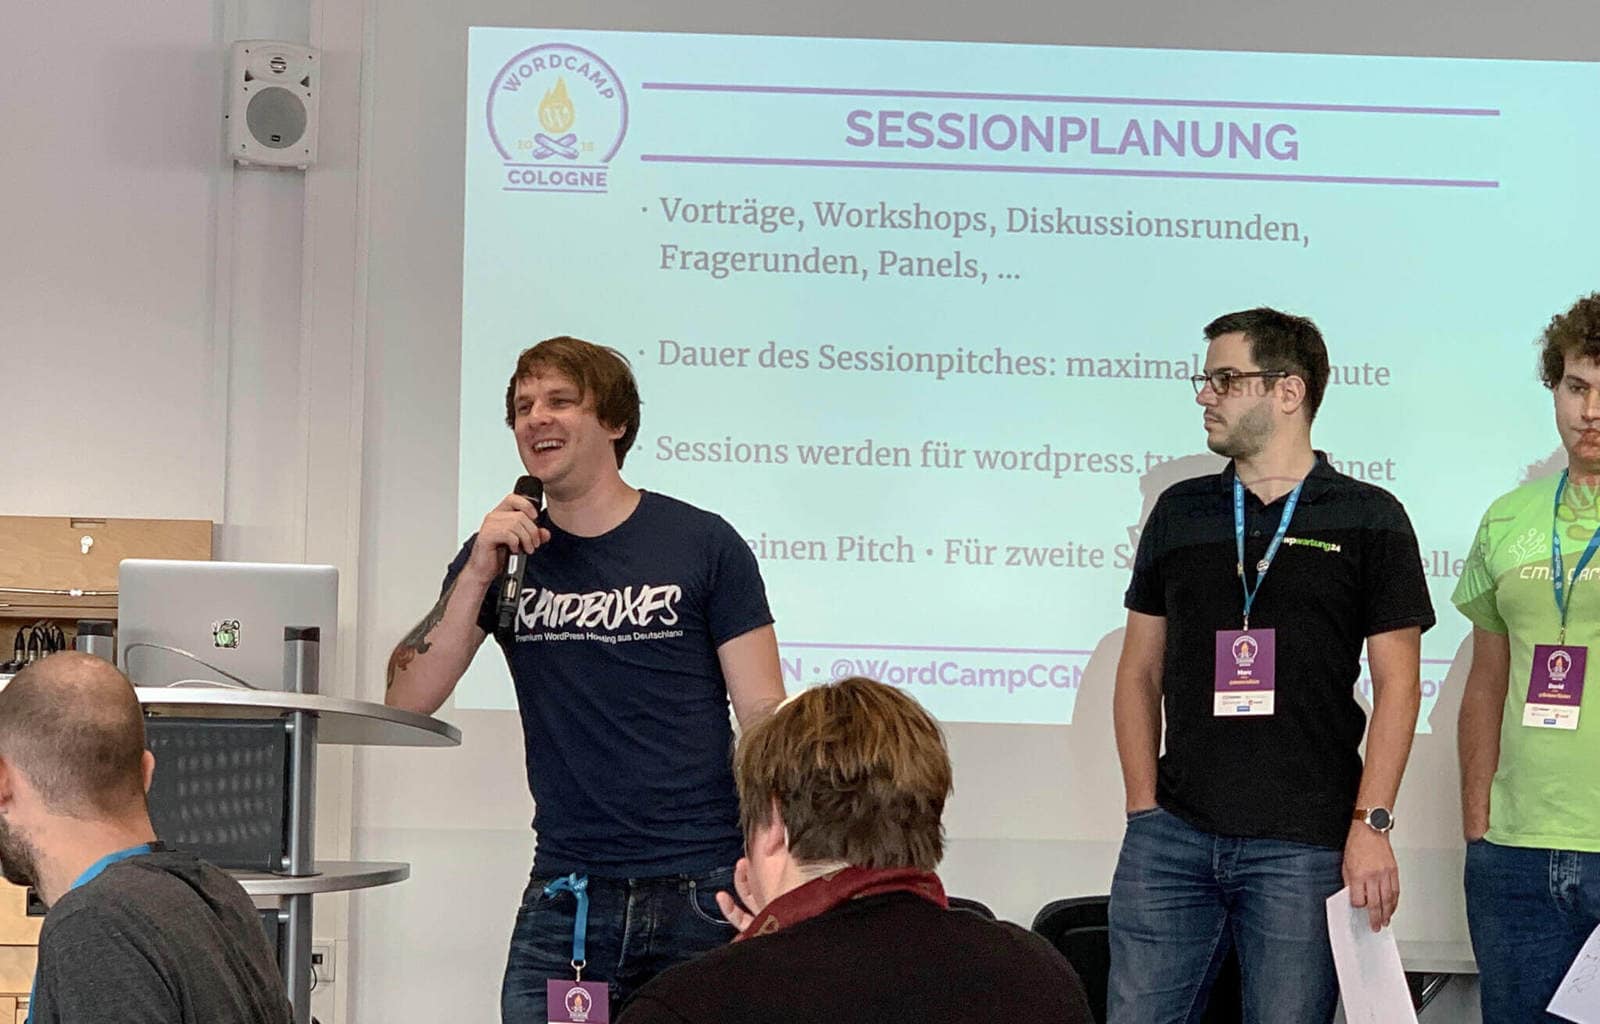 WordCamp Cologne: Matthias von Raidboxes alla sessione pitch